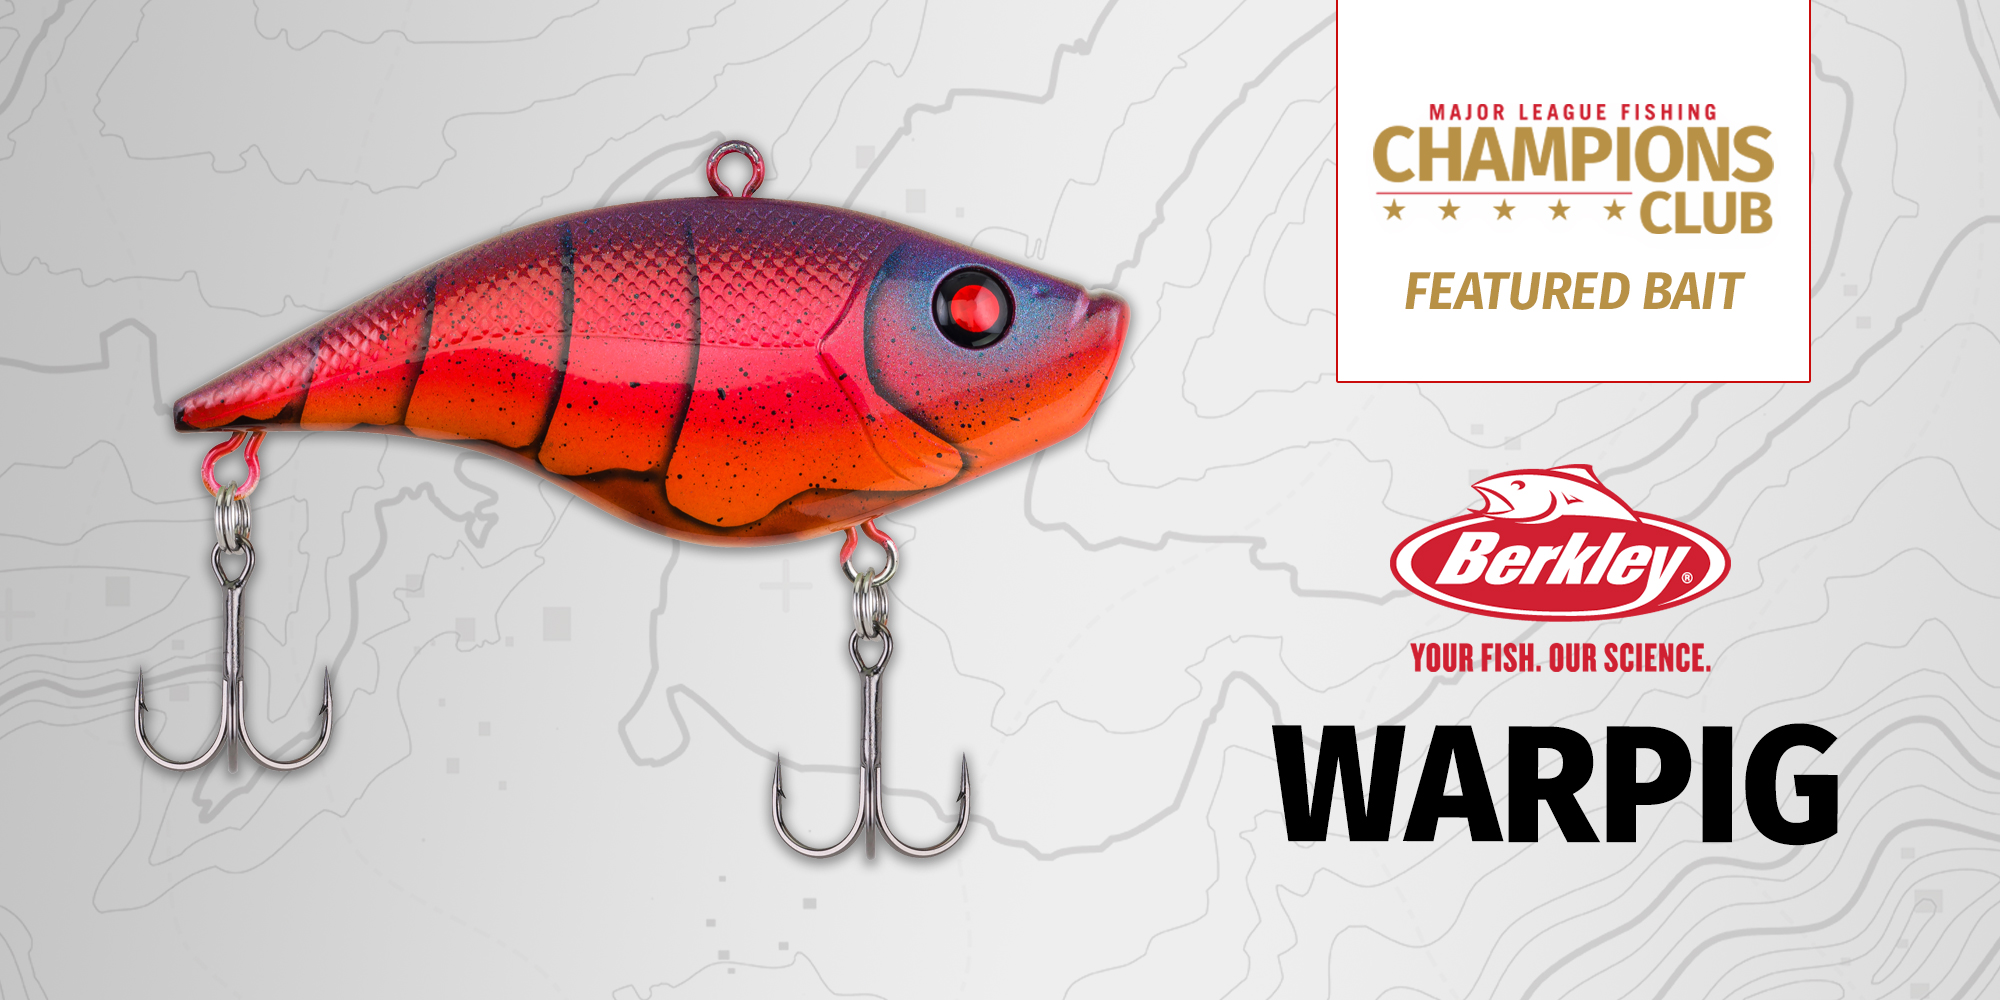 Featured Bait: Berkley Warpig Crankbait - Major League Fishing